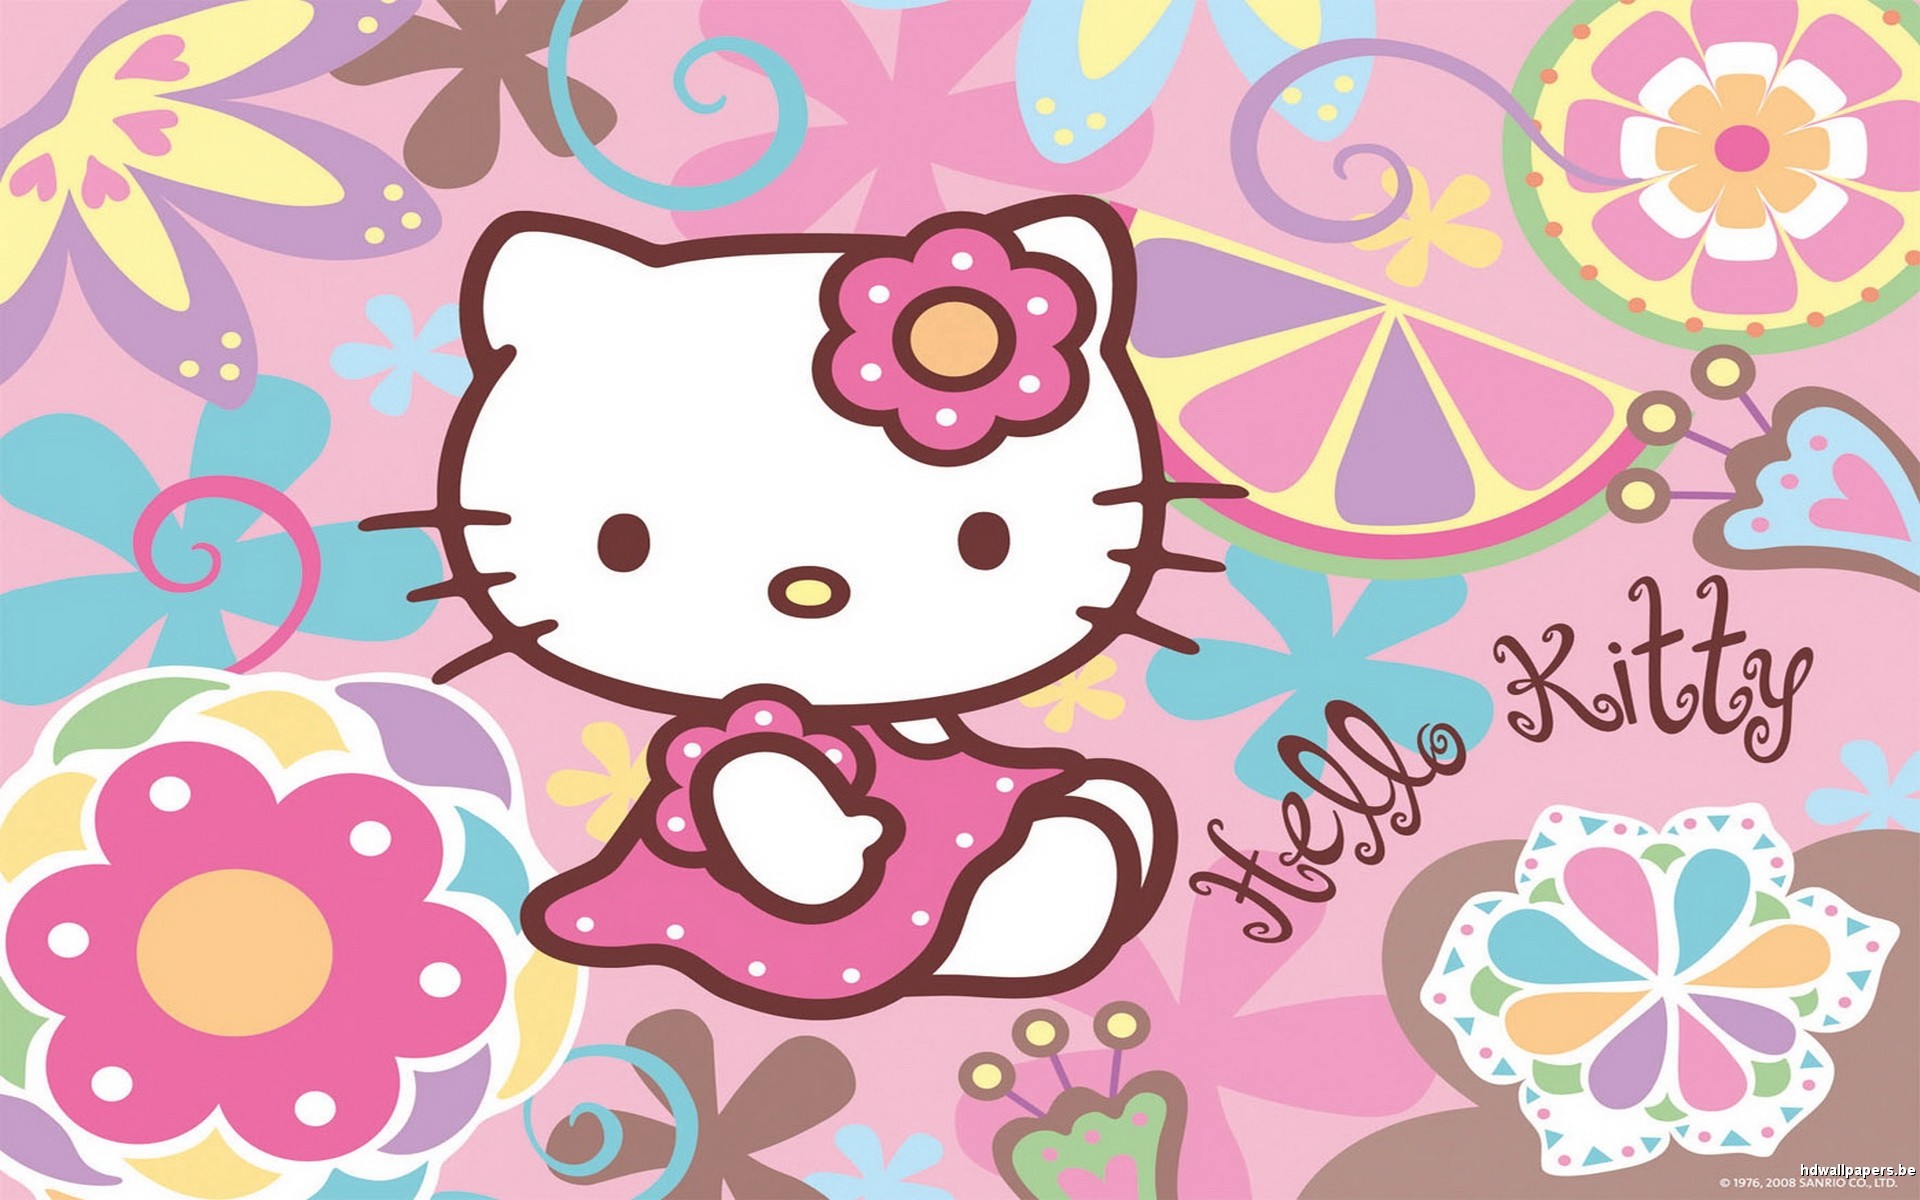 20 Cute Hello Kitty Wallpaper Ideas  Flower  Hello Kitty Background   Idea Wallpapers  iPhone WallpapersColor Schemes